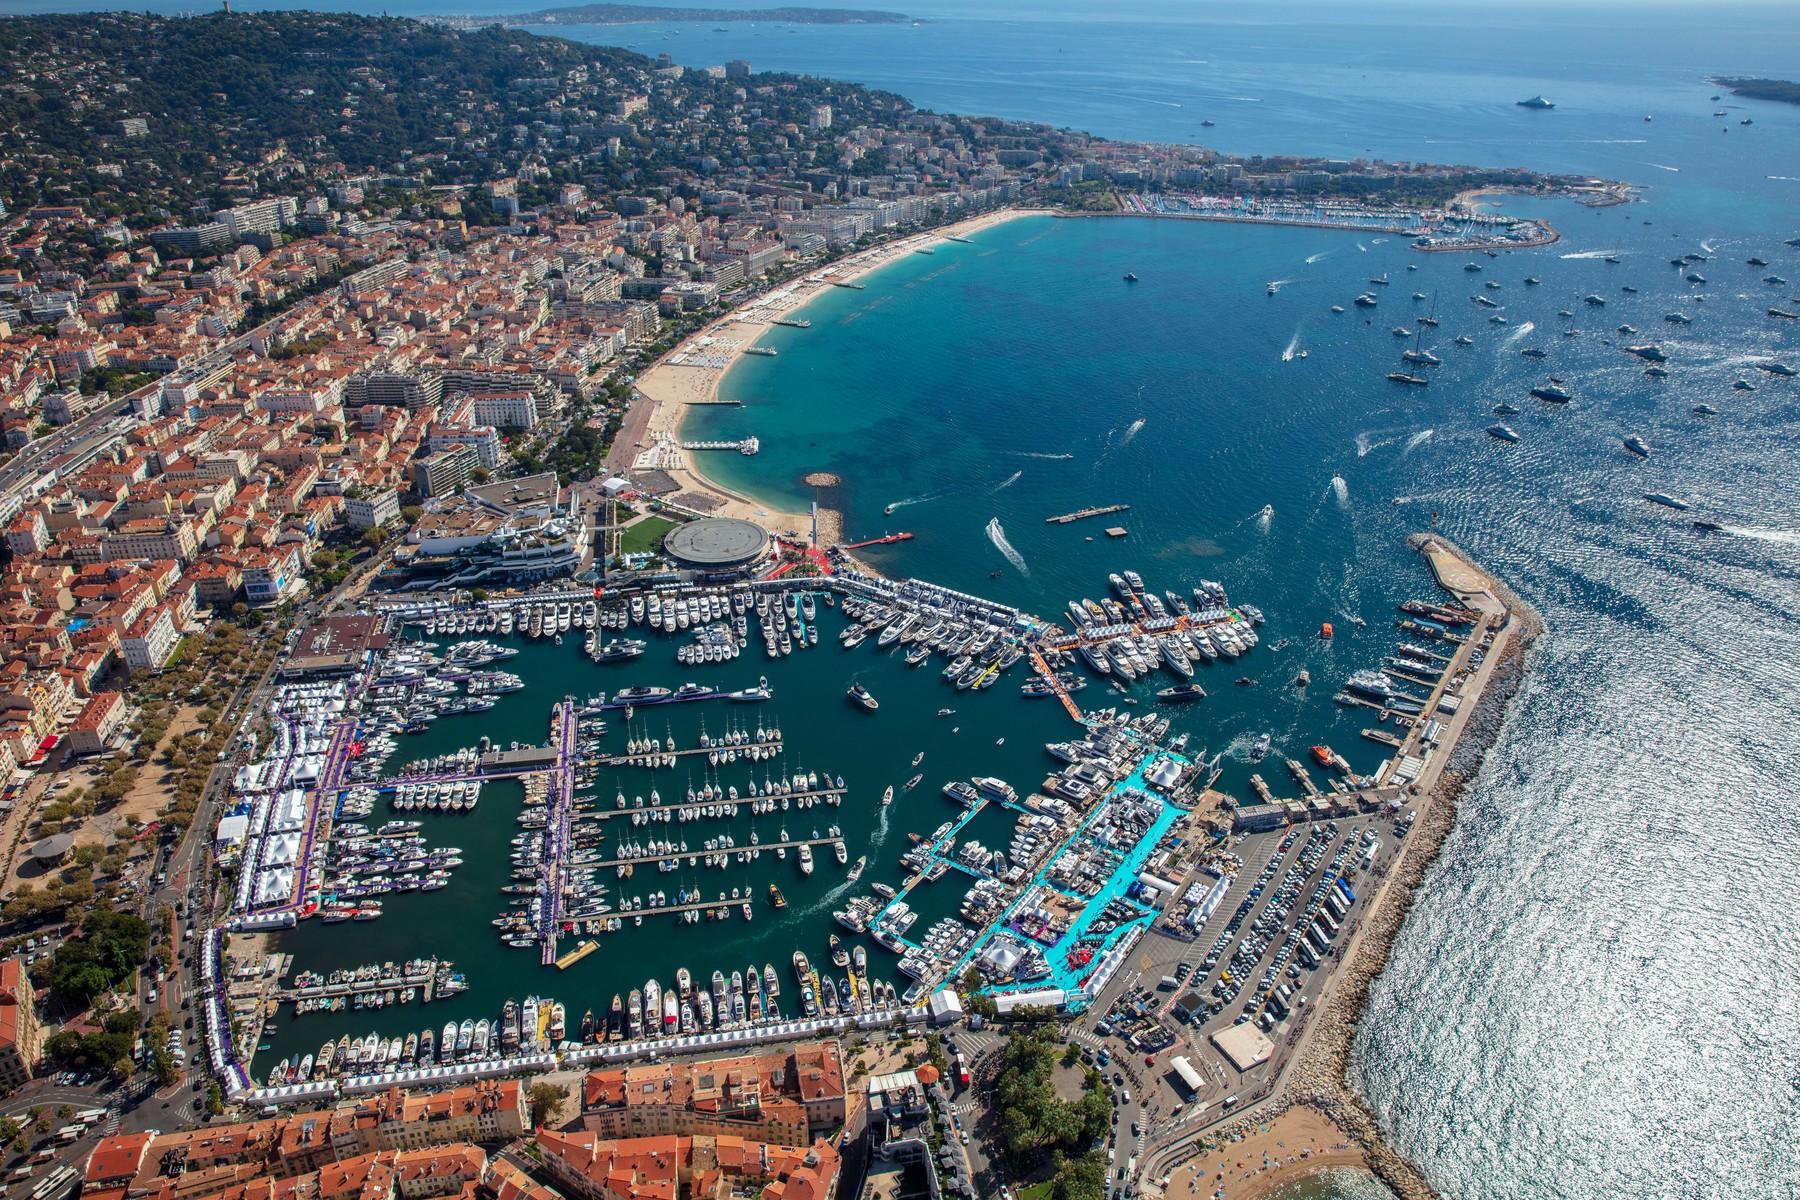 eBlue_economy_Cannes Yachting Feestival 2021